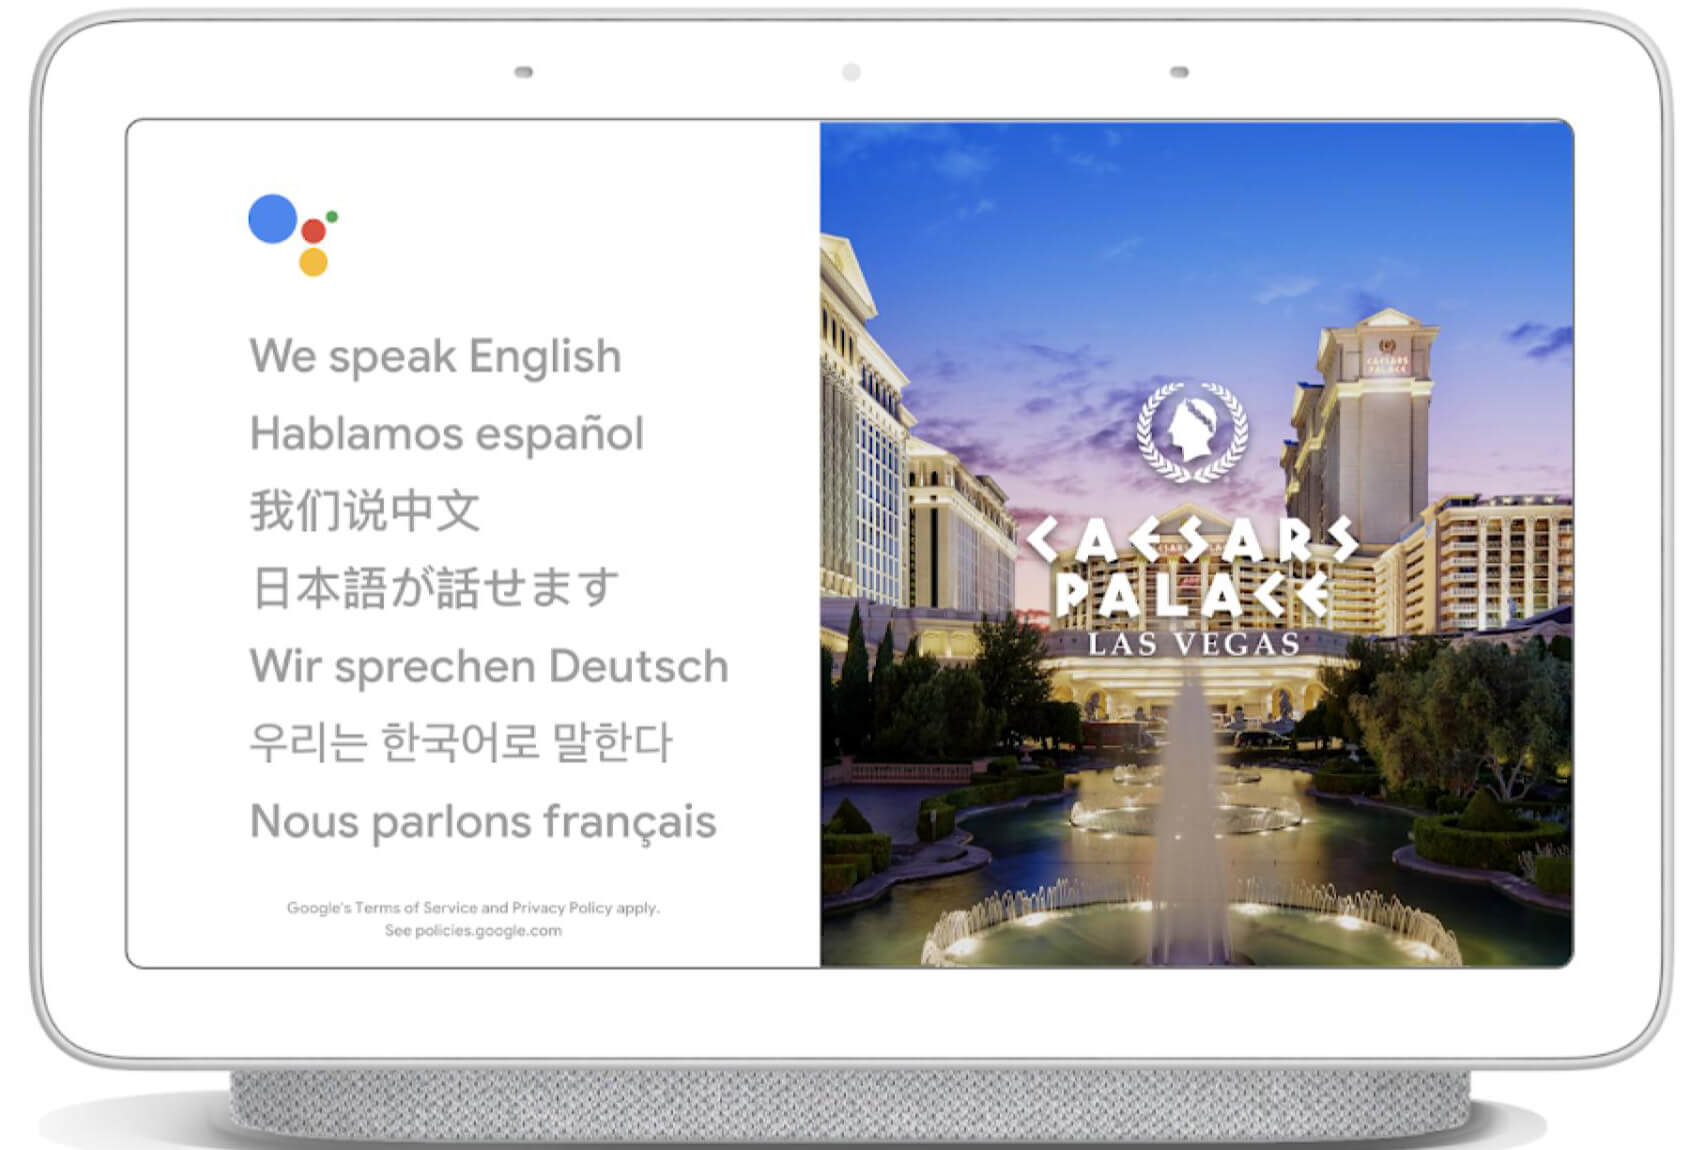 Google Interpret Mode on Google Home - Google Home Language Skills